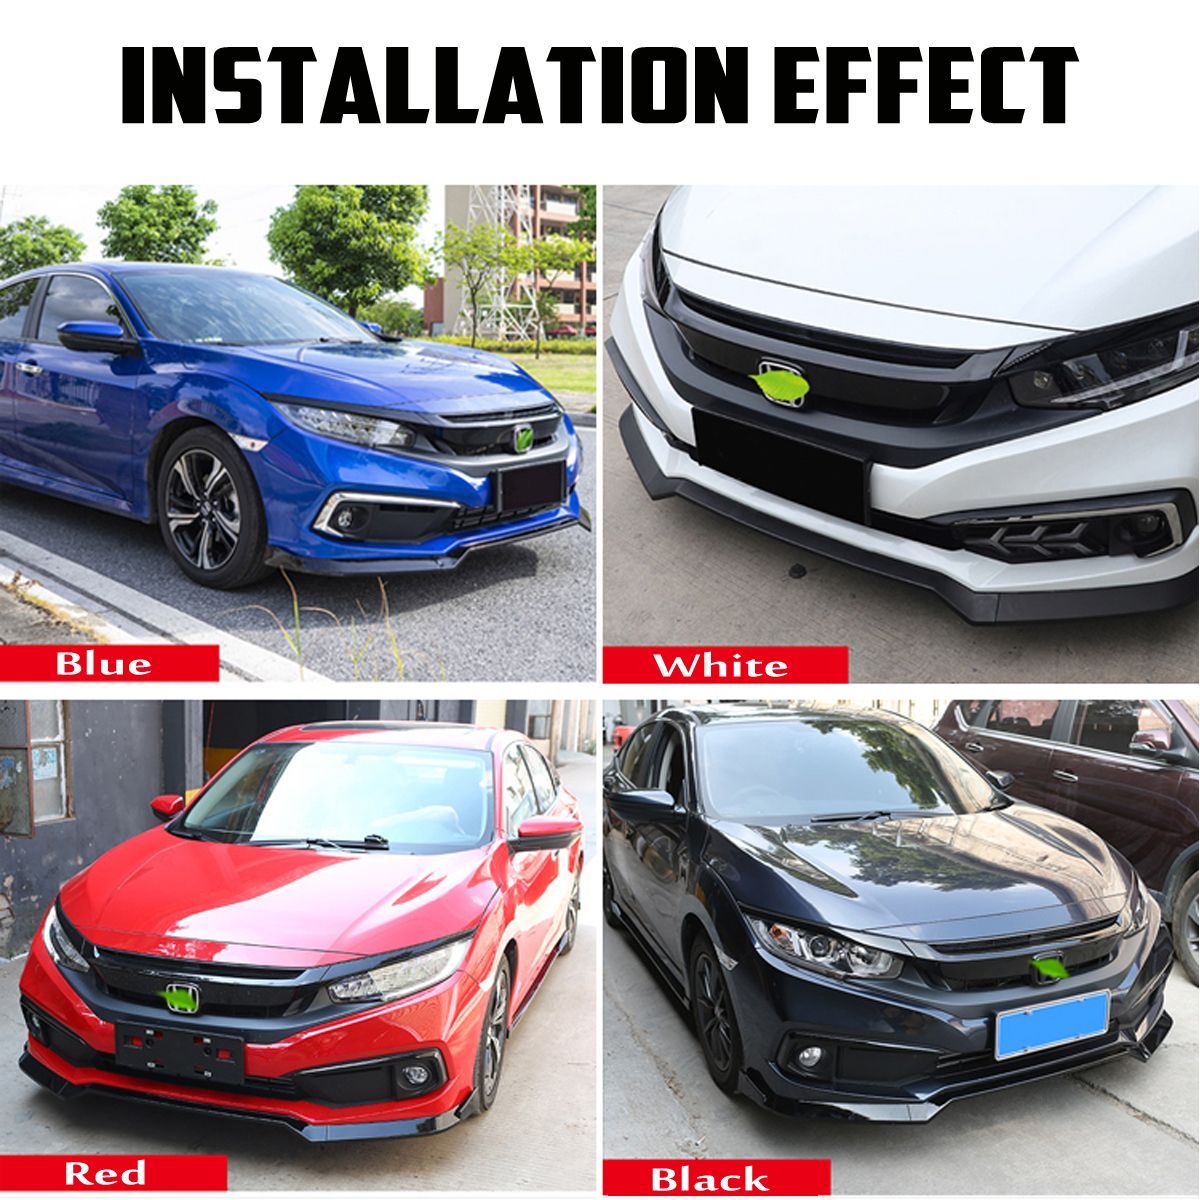 Matte-Black-Front-Bumper-Lip-Body-Spoiler-Kit-For-Honda-Civic-2019-2020-1709080